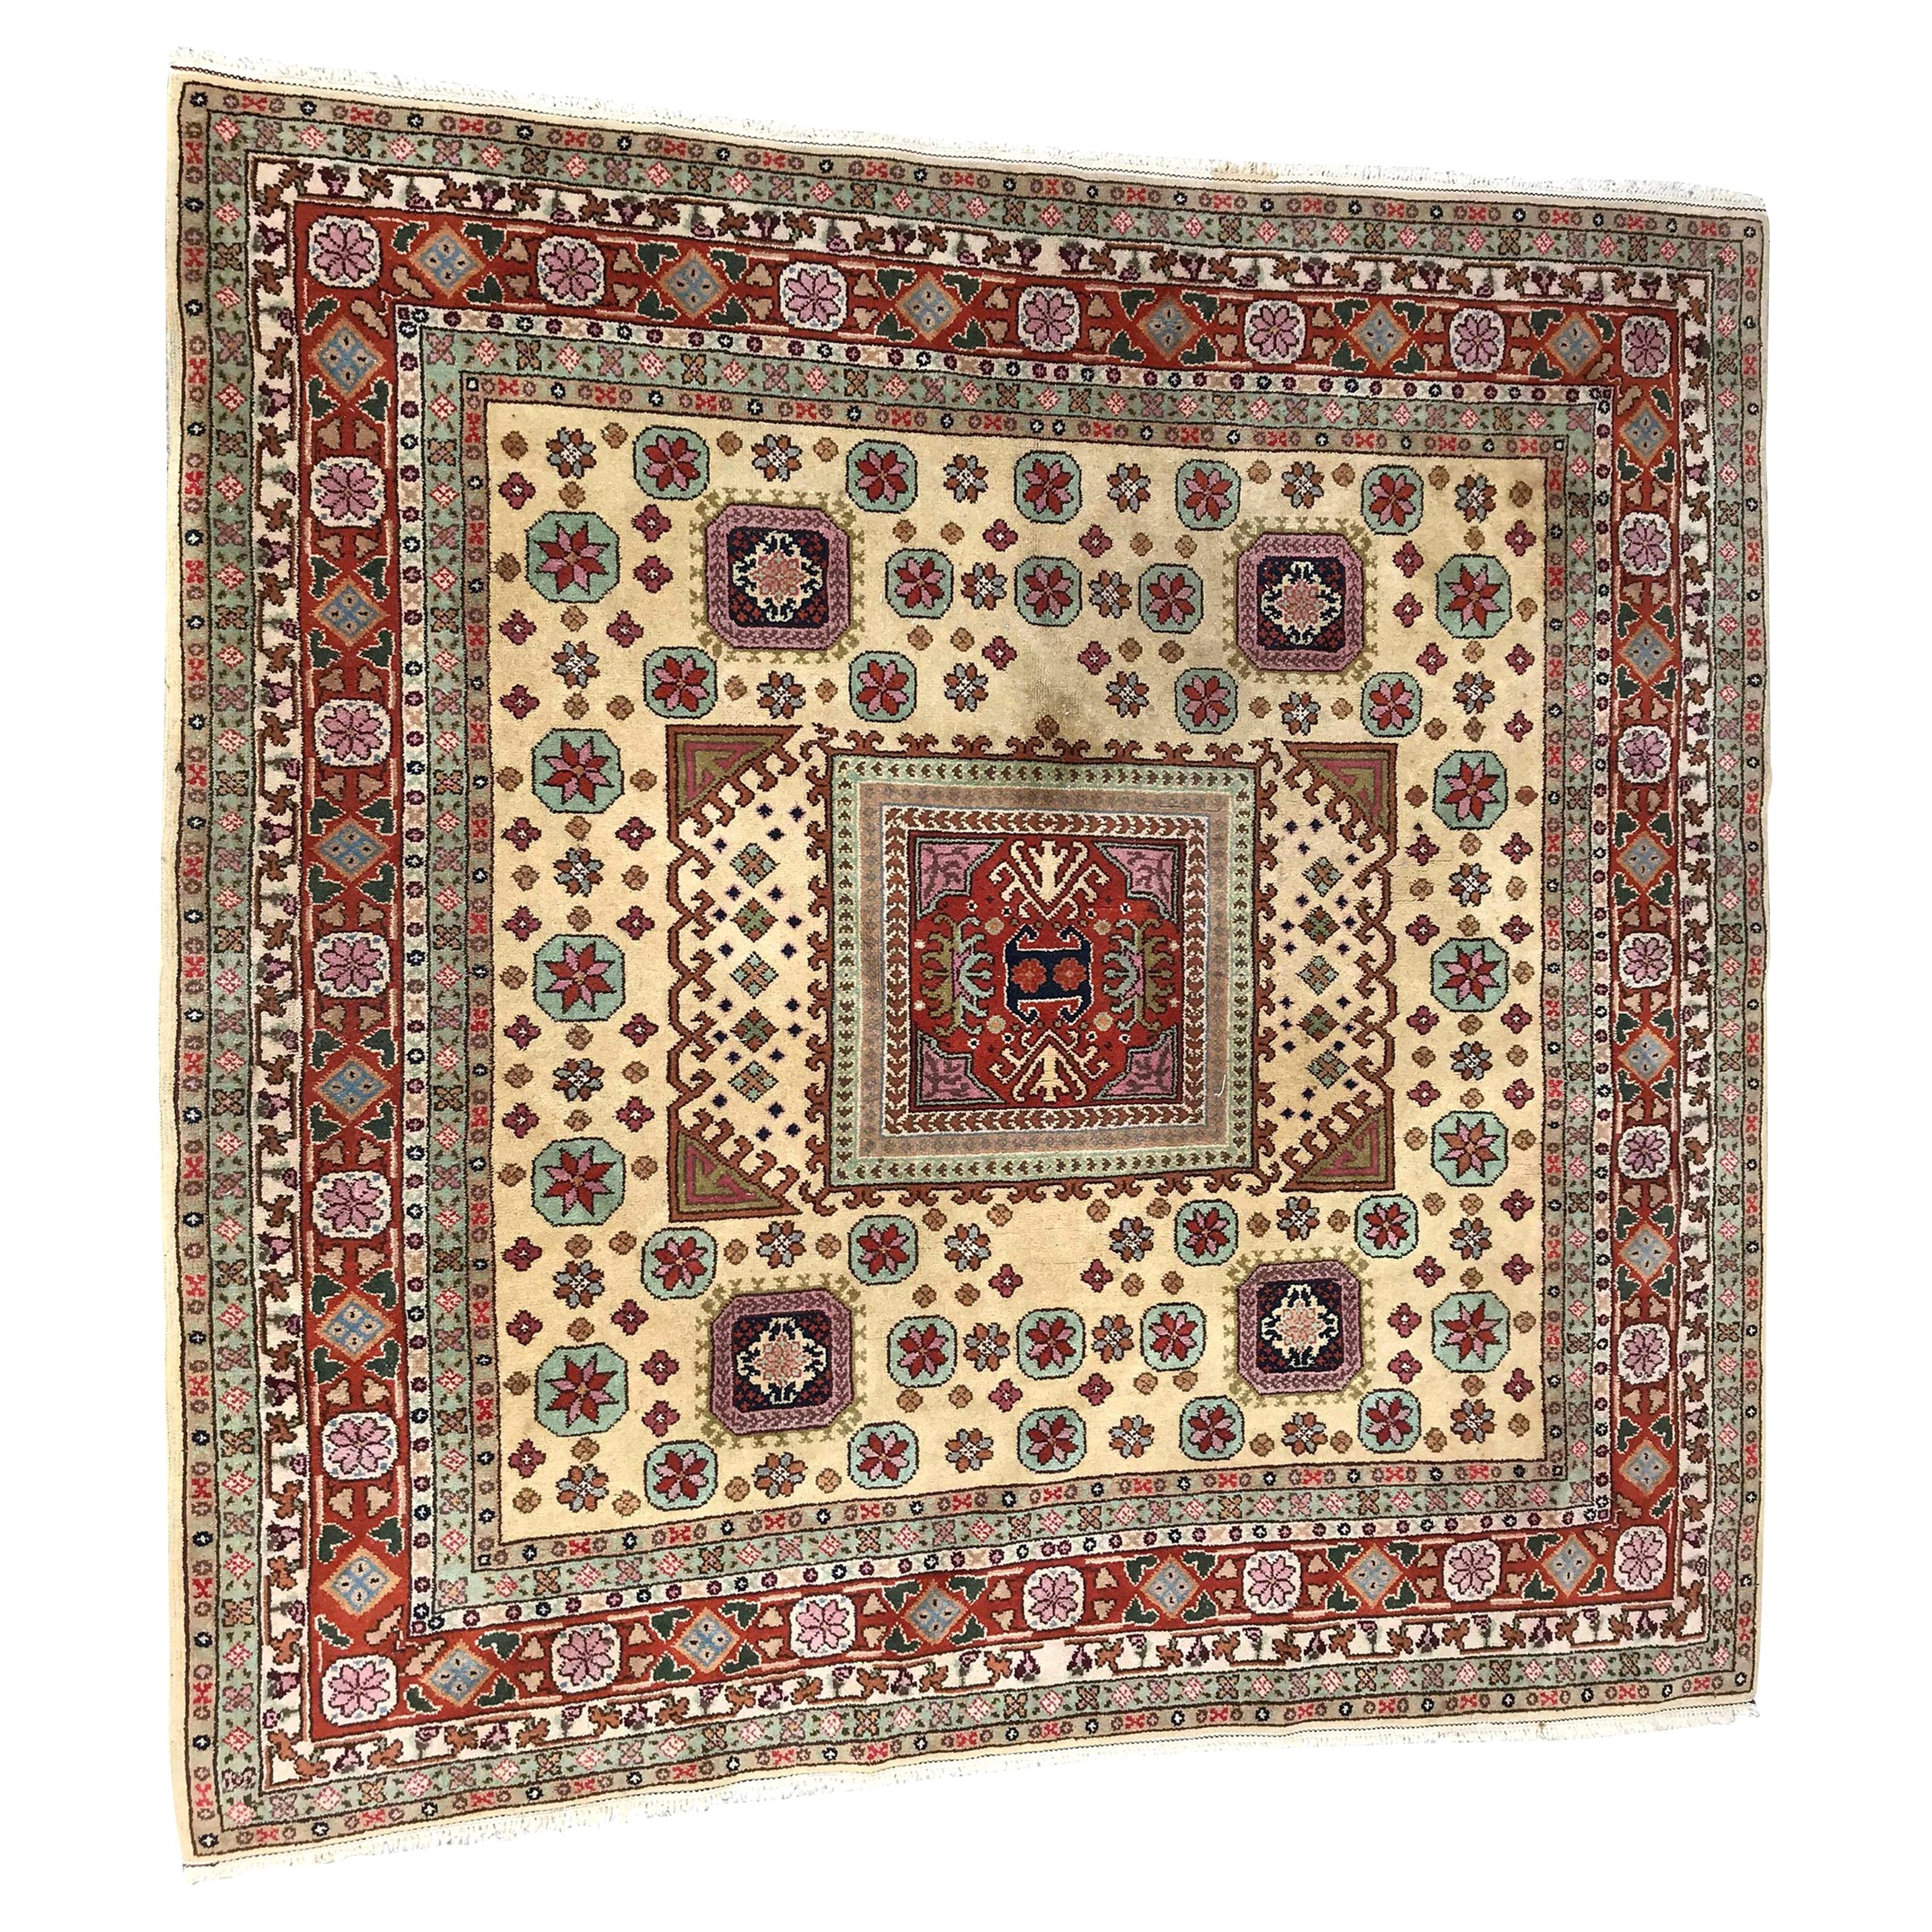 Bobyrug's Transylvanian Square Persischer Design-Teppich